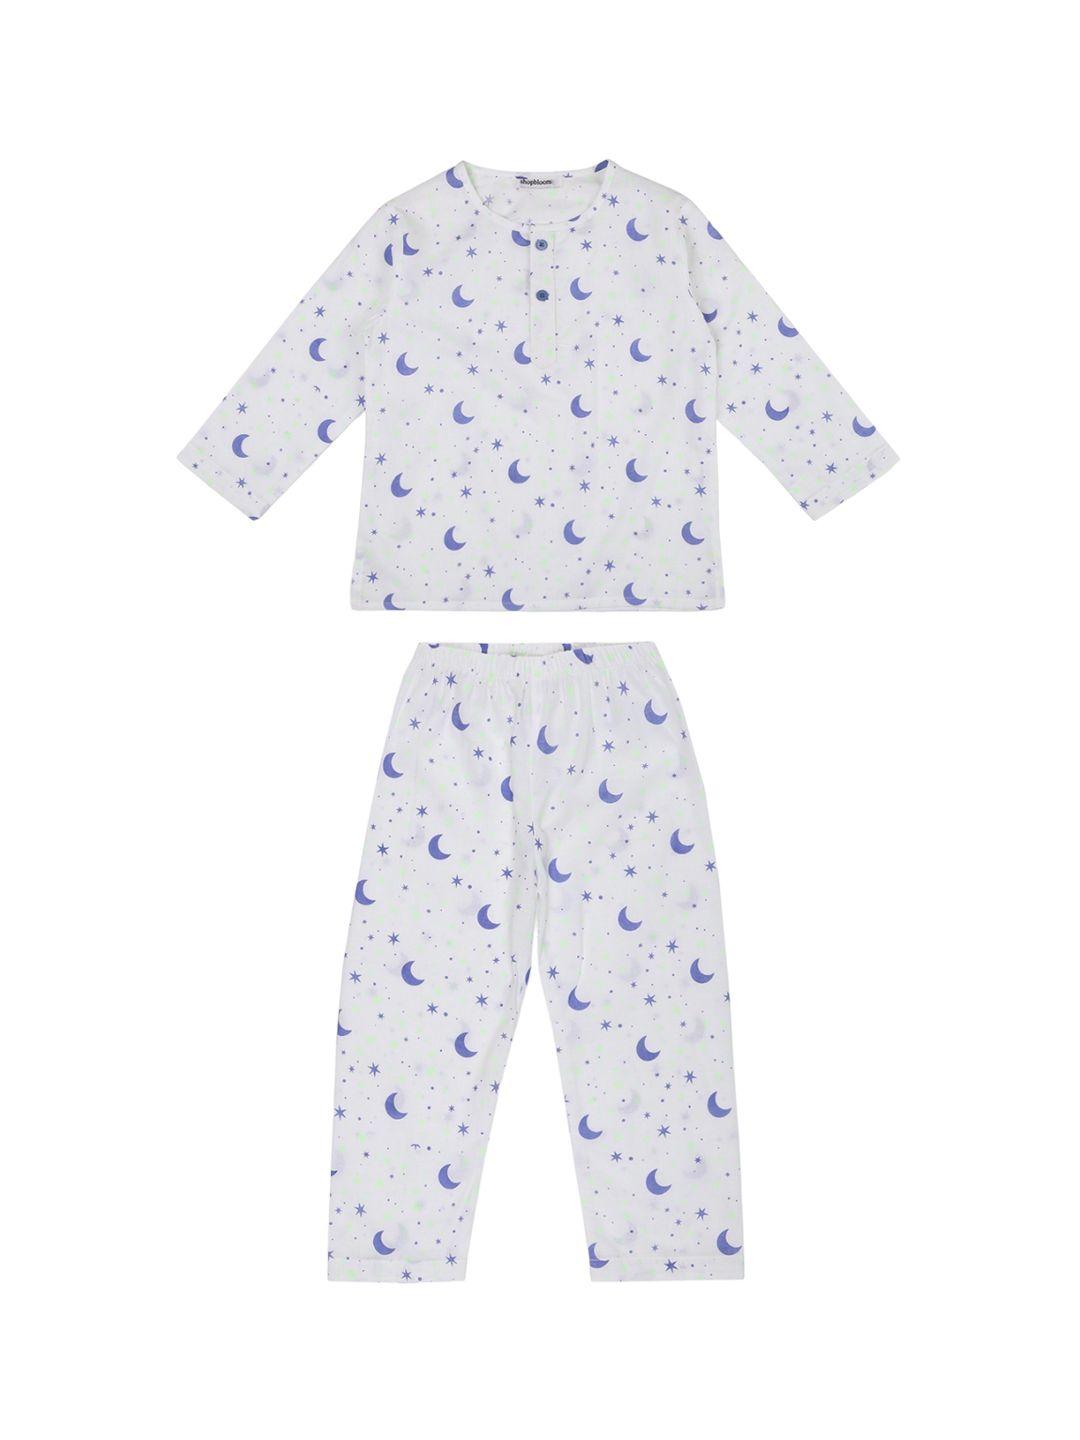 shopbloom kids conversational printed pure cotton night suit